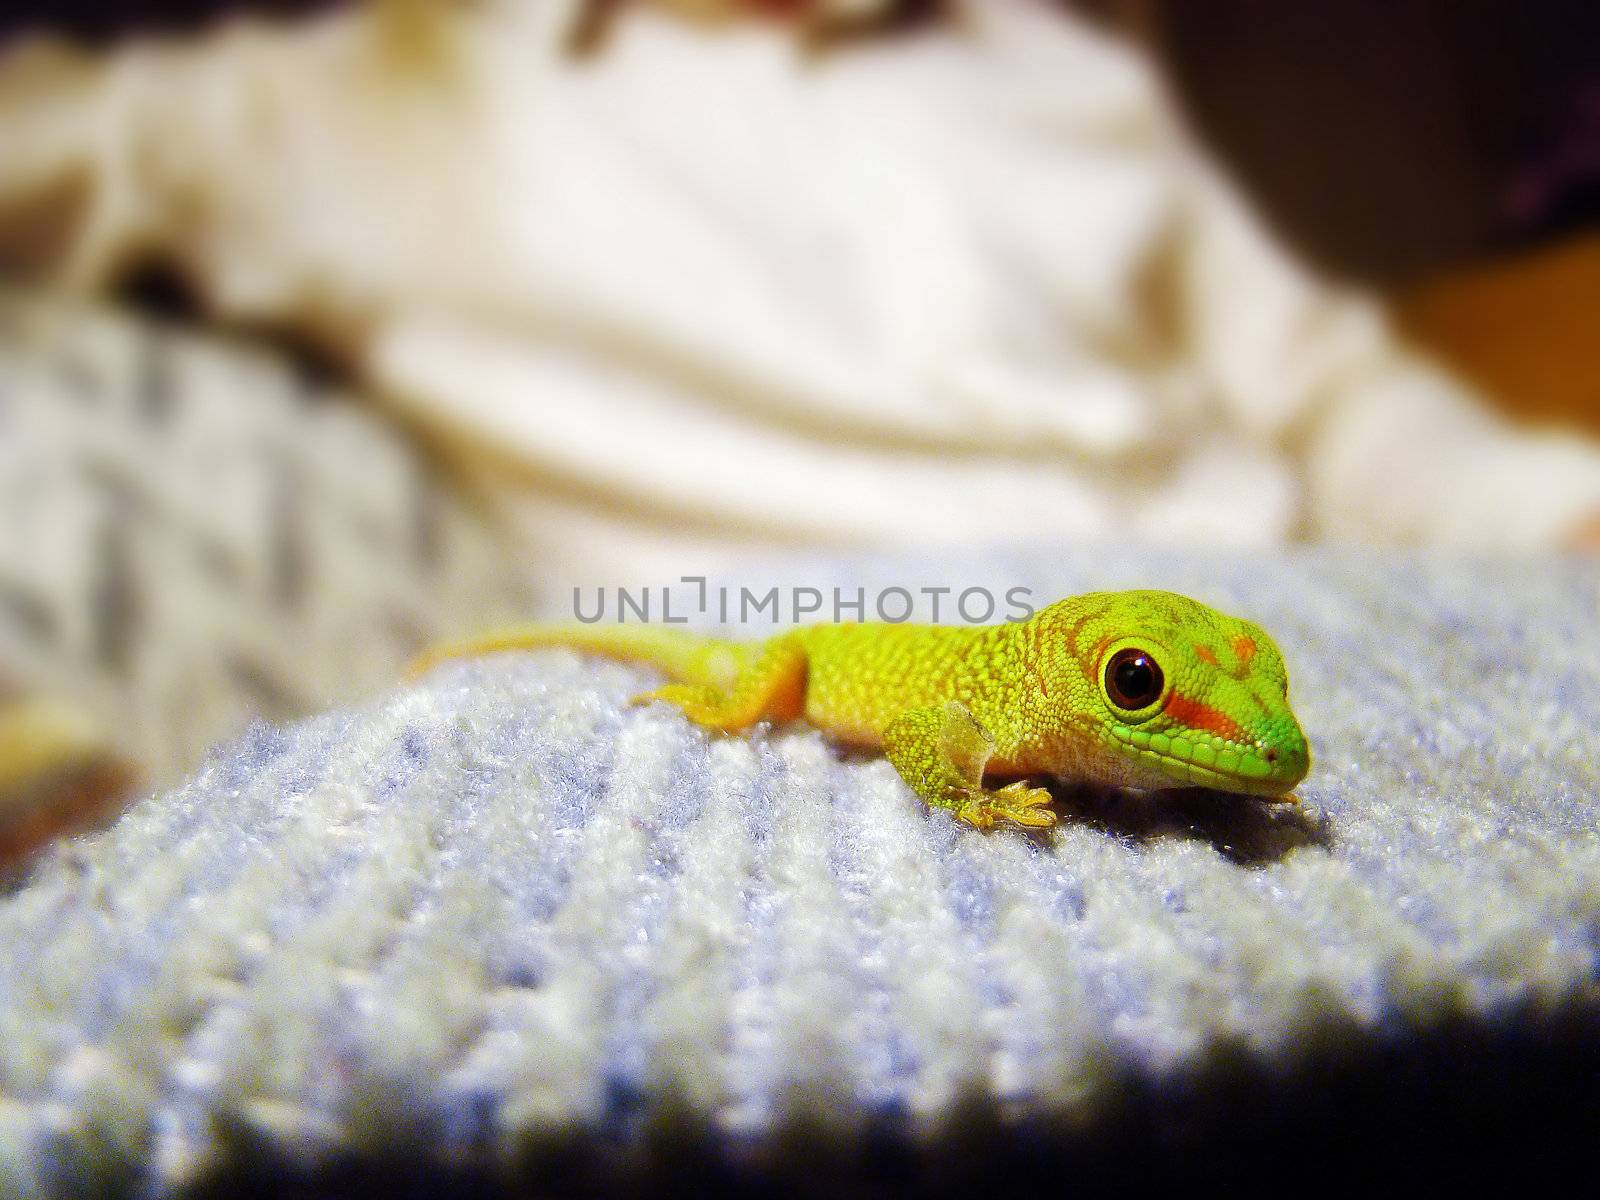 baby madagascar giant day gecko by amandaols